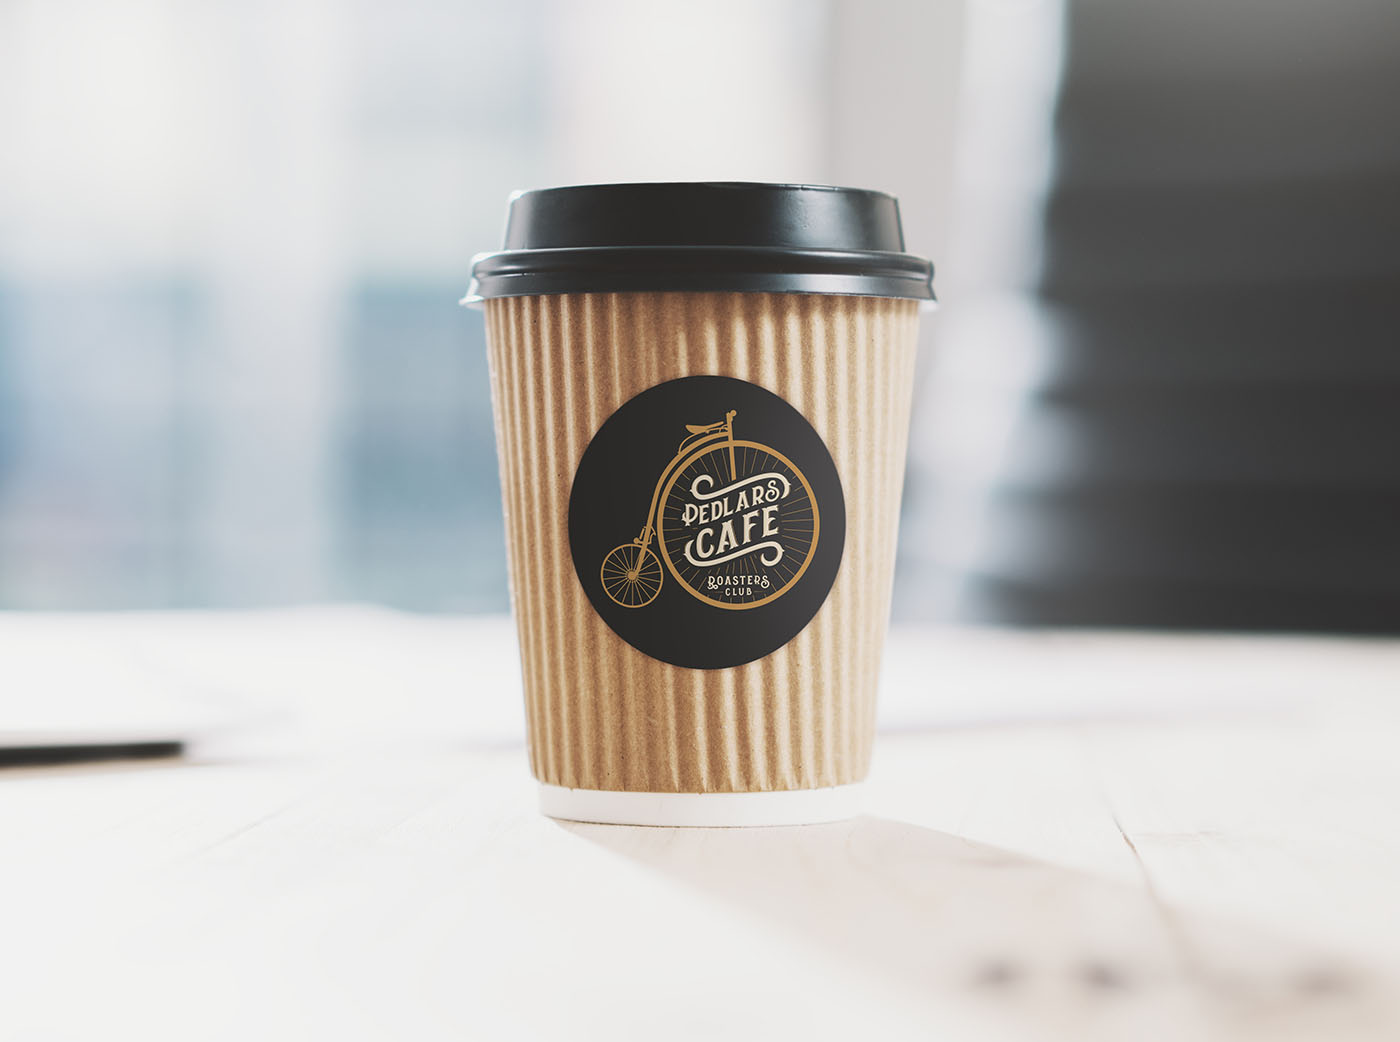 Pedlars Cafe Coffee Cup